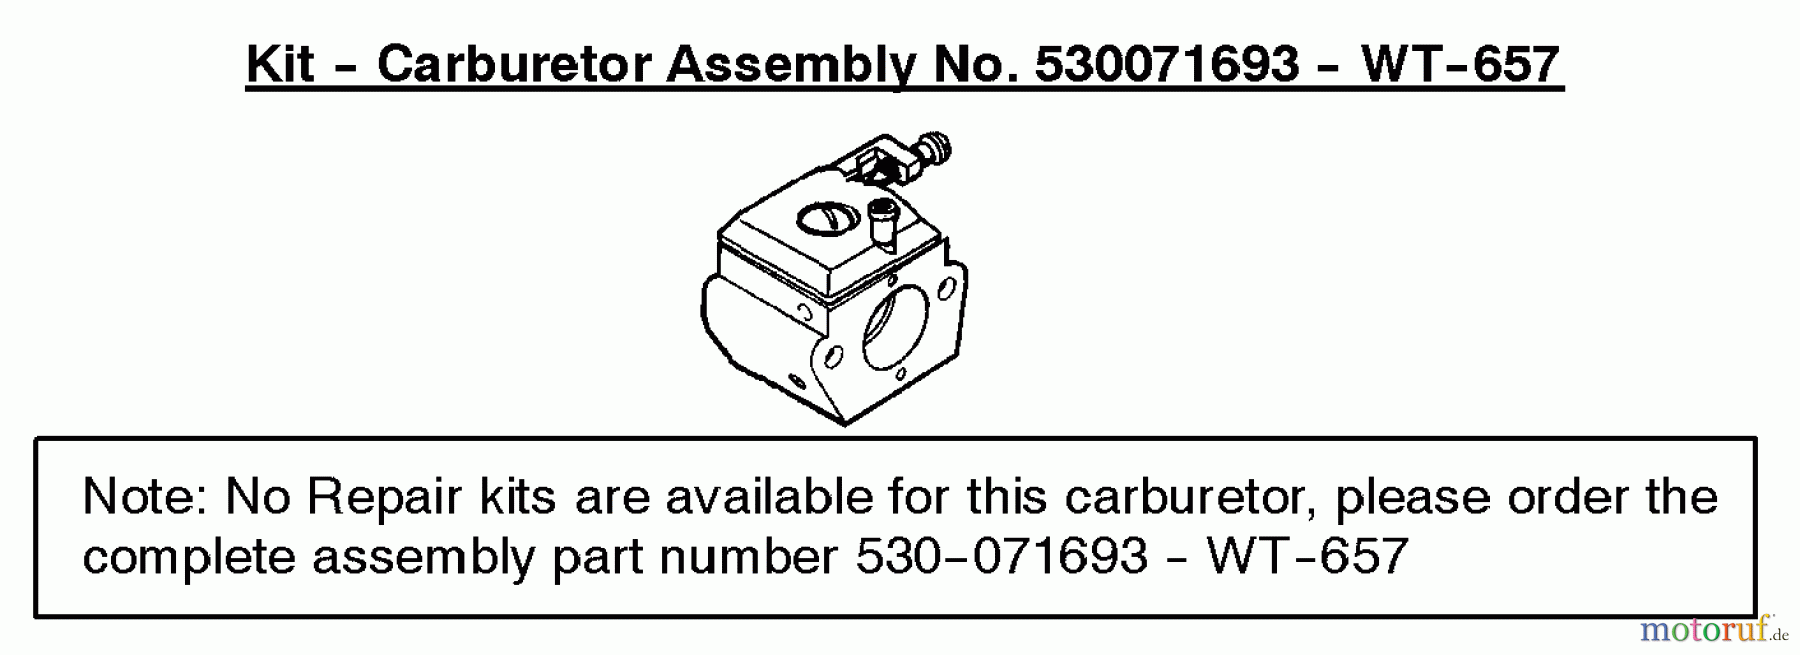  Poulan / Weed Eater Motorsägen PP295 (Type 4) - Poulan Pro Chainsaw Carburetor Assembly Kit - (WT-657) 530071693